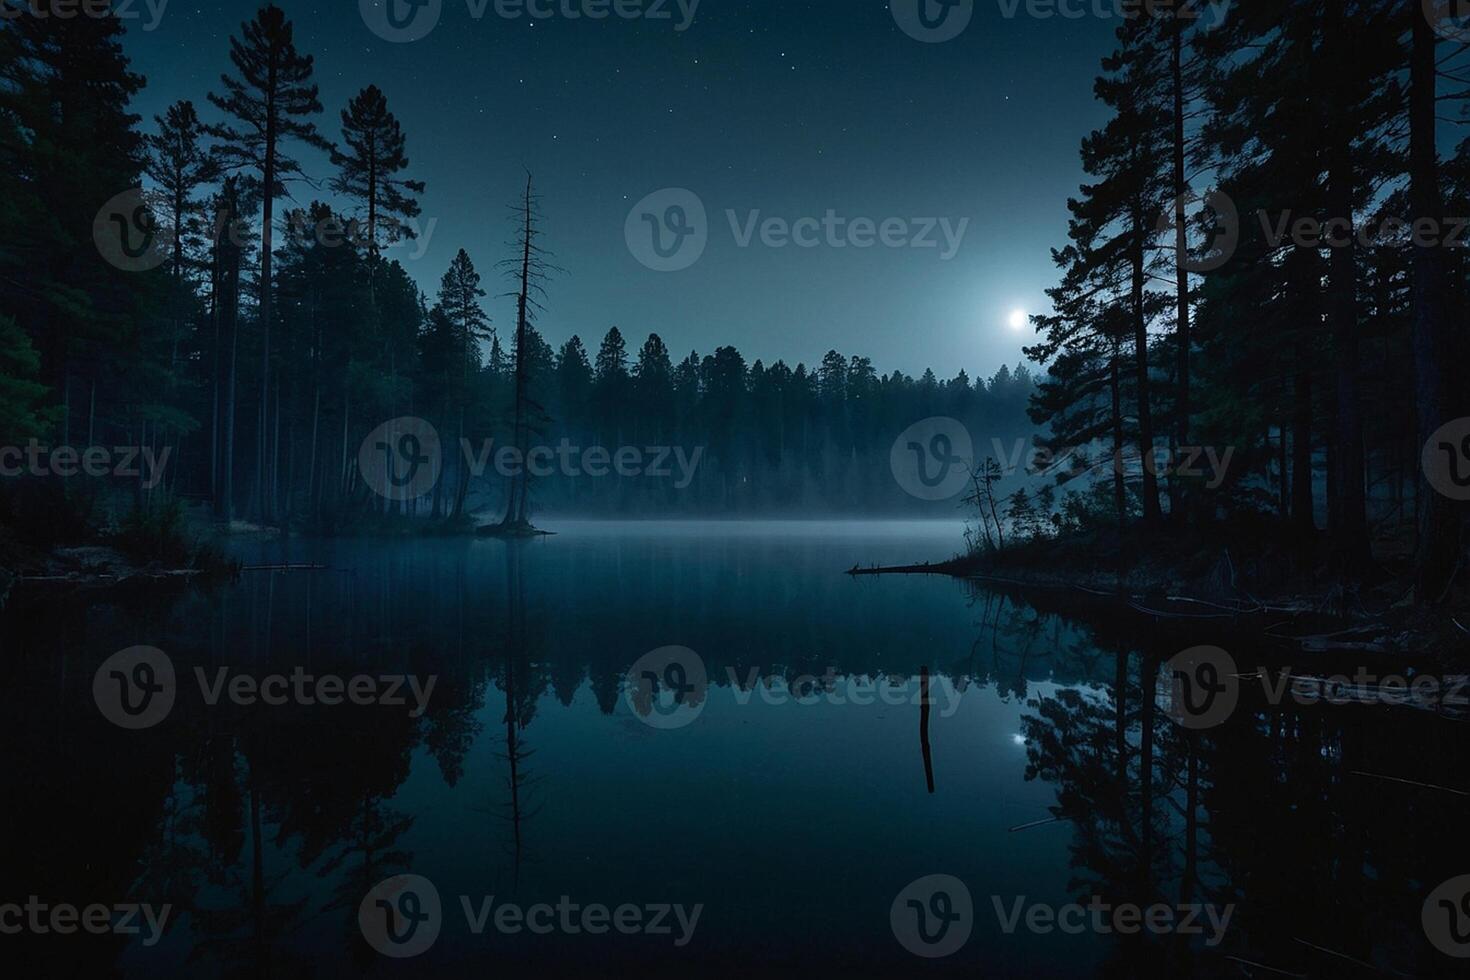 a moon rises over a lake at night photo